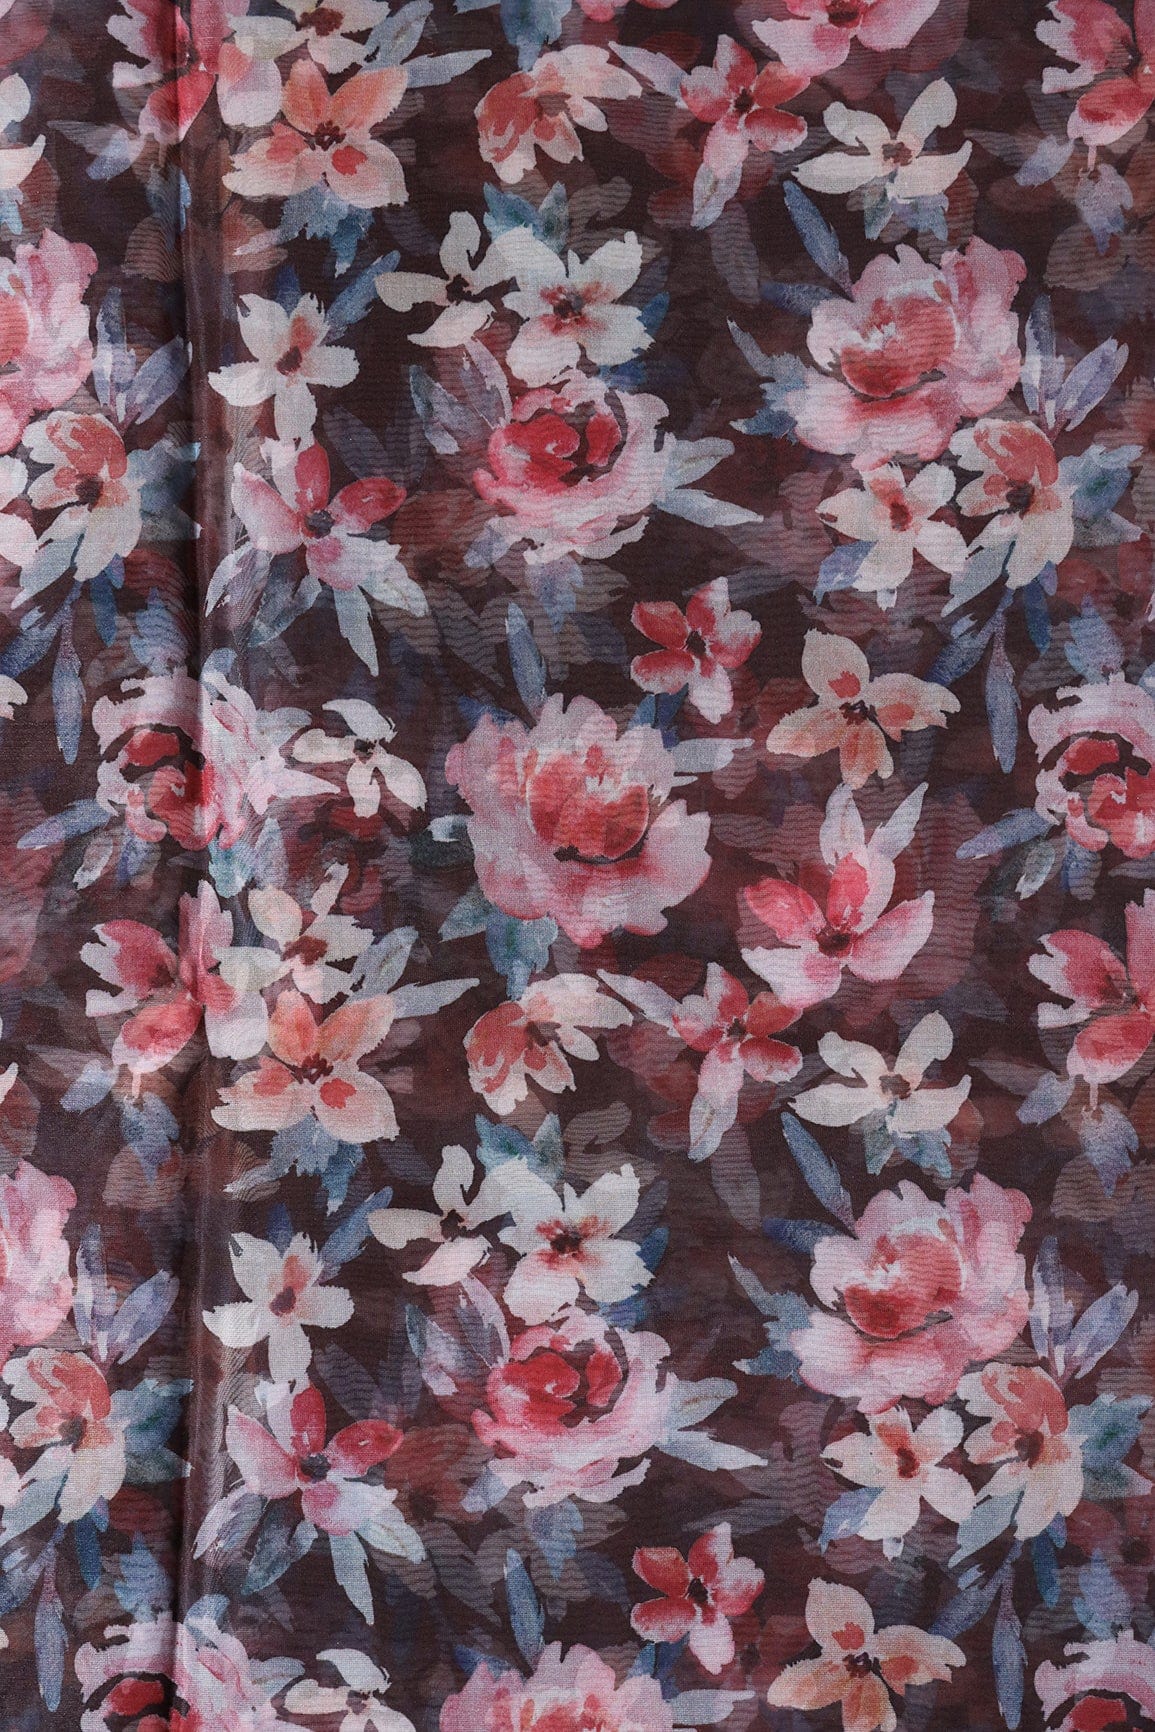 doeraa Prints Red And White Floral Digital Print On Dark Brown Organza Fabric